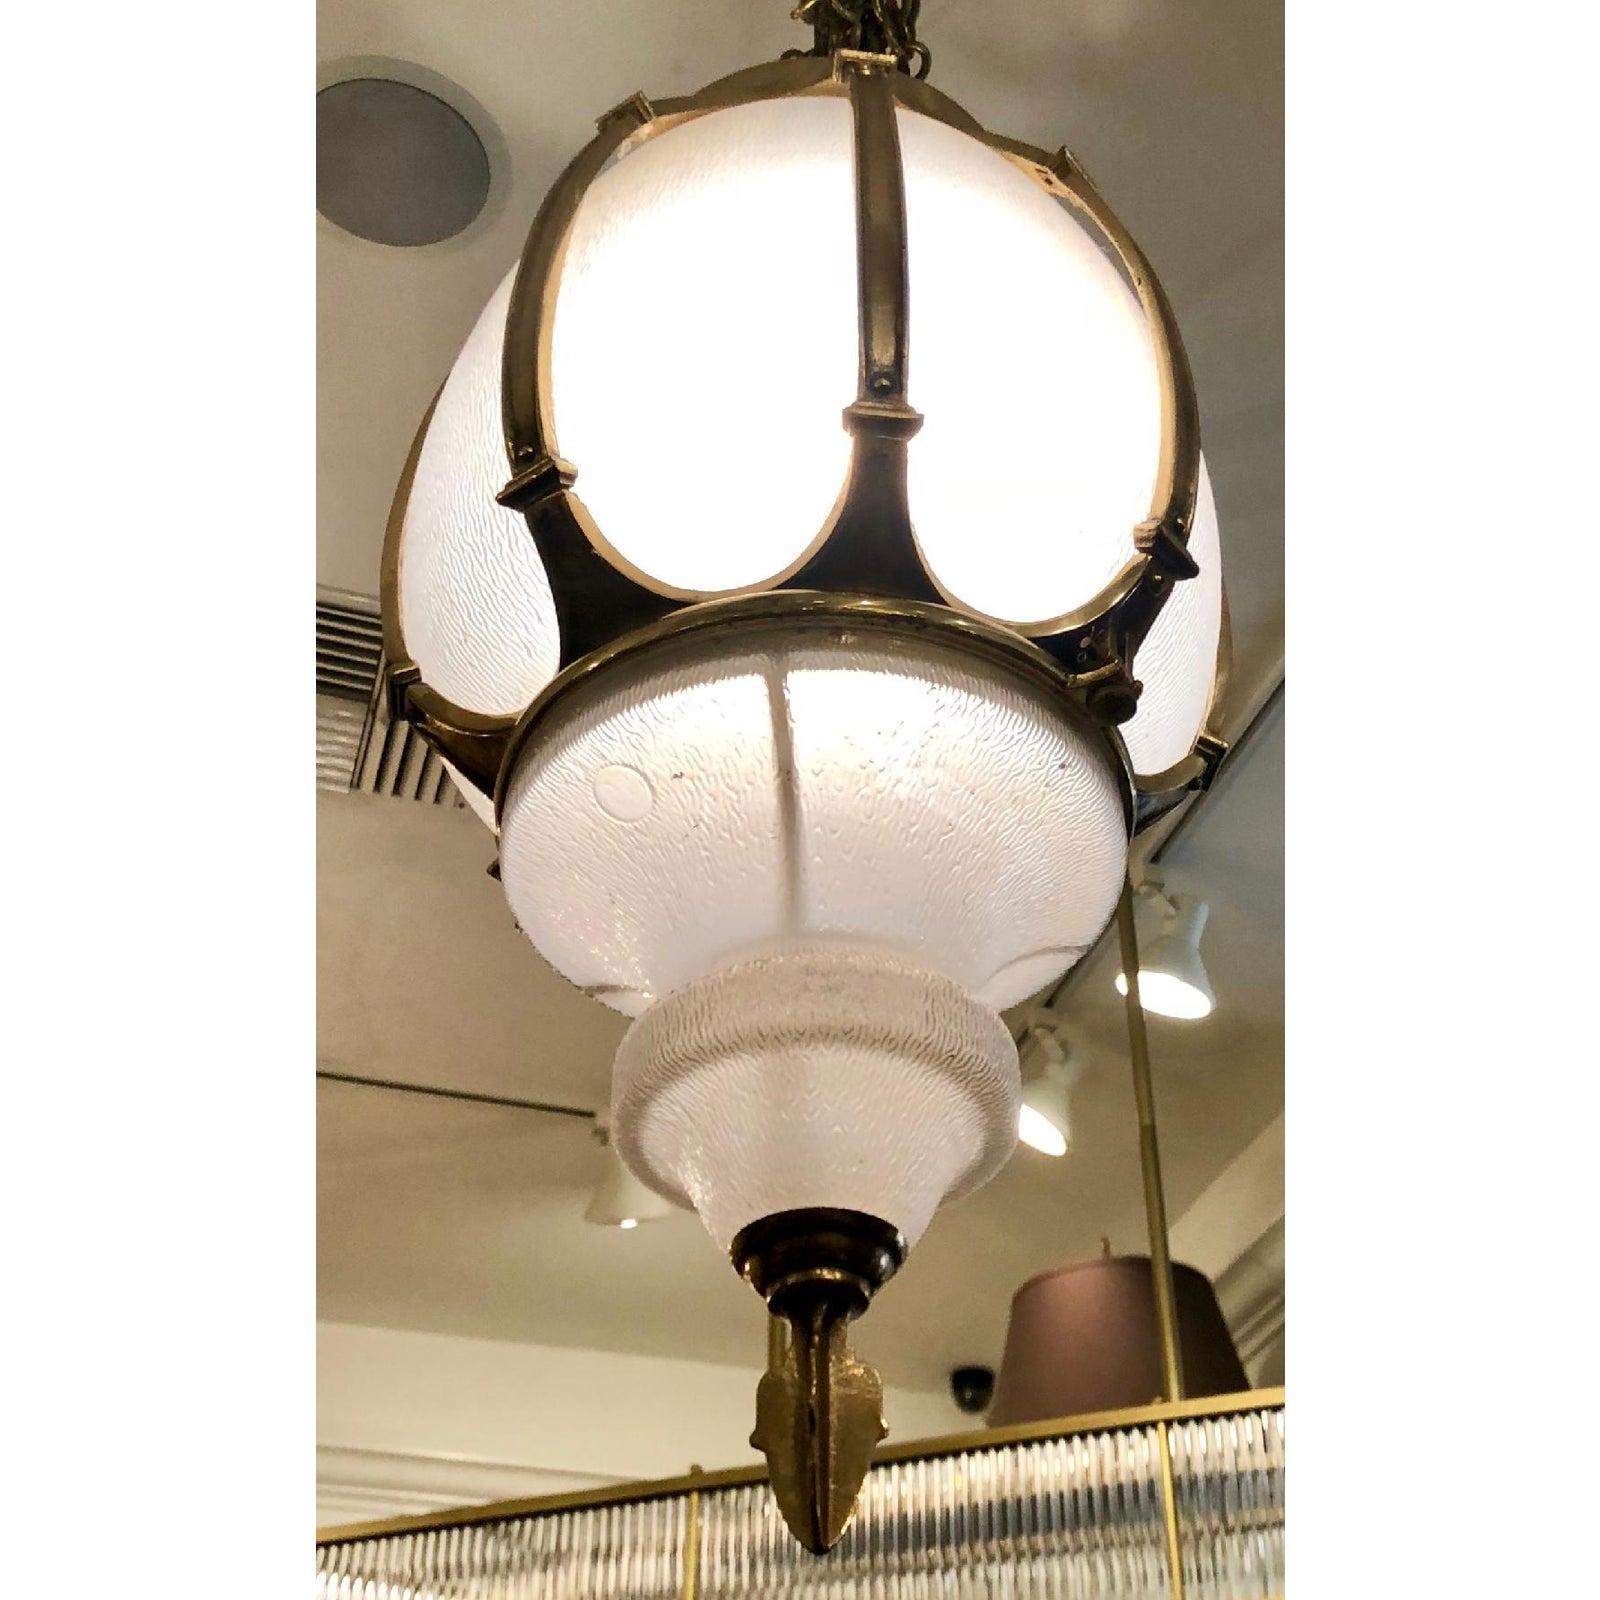 Huge vintage gilt bronze and glass street light lantern pendant chandelier.